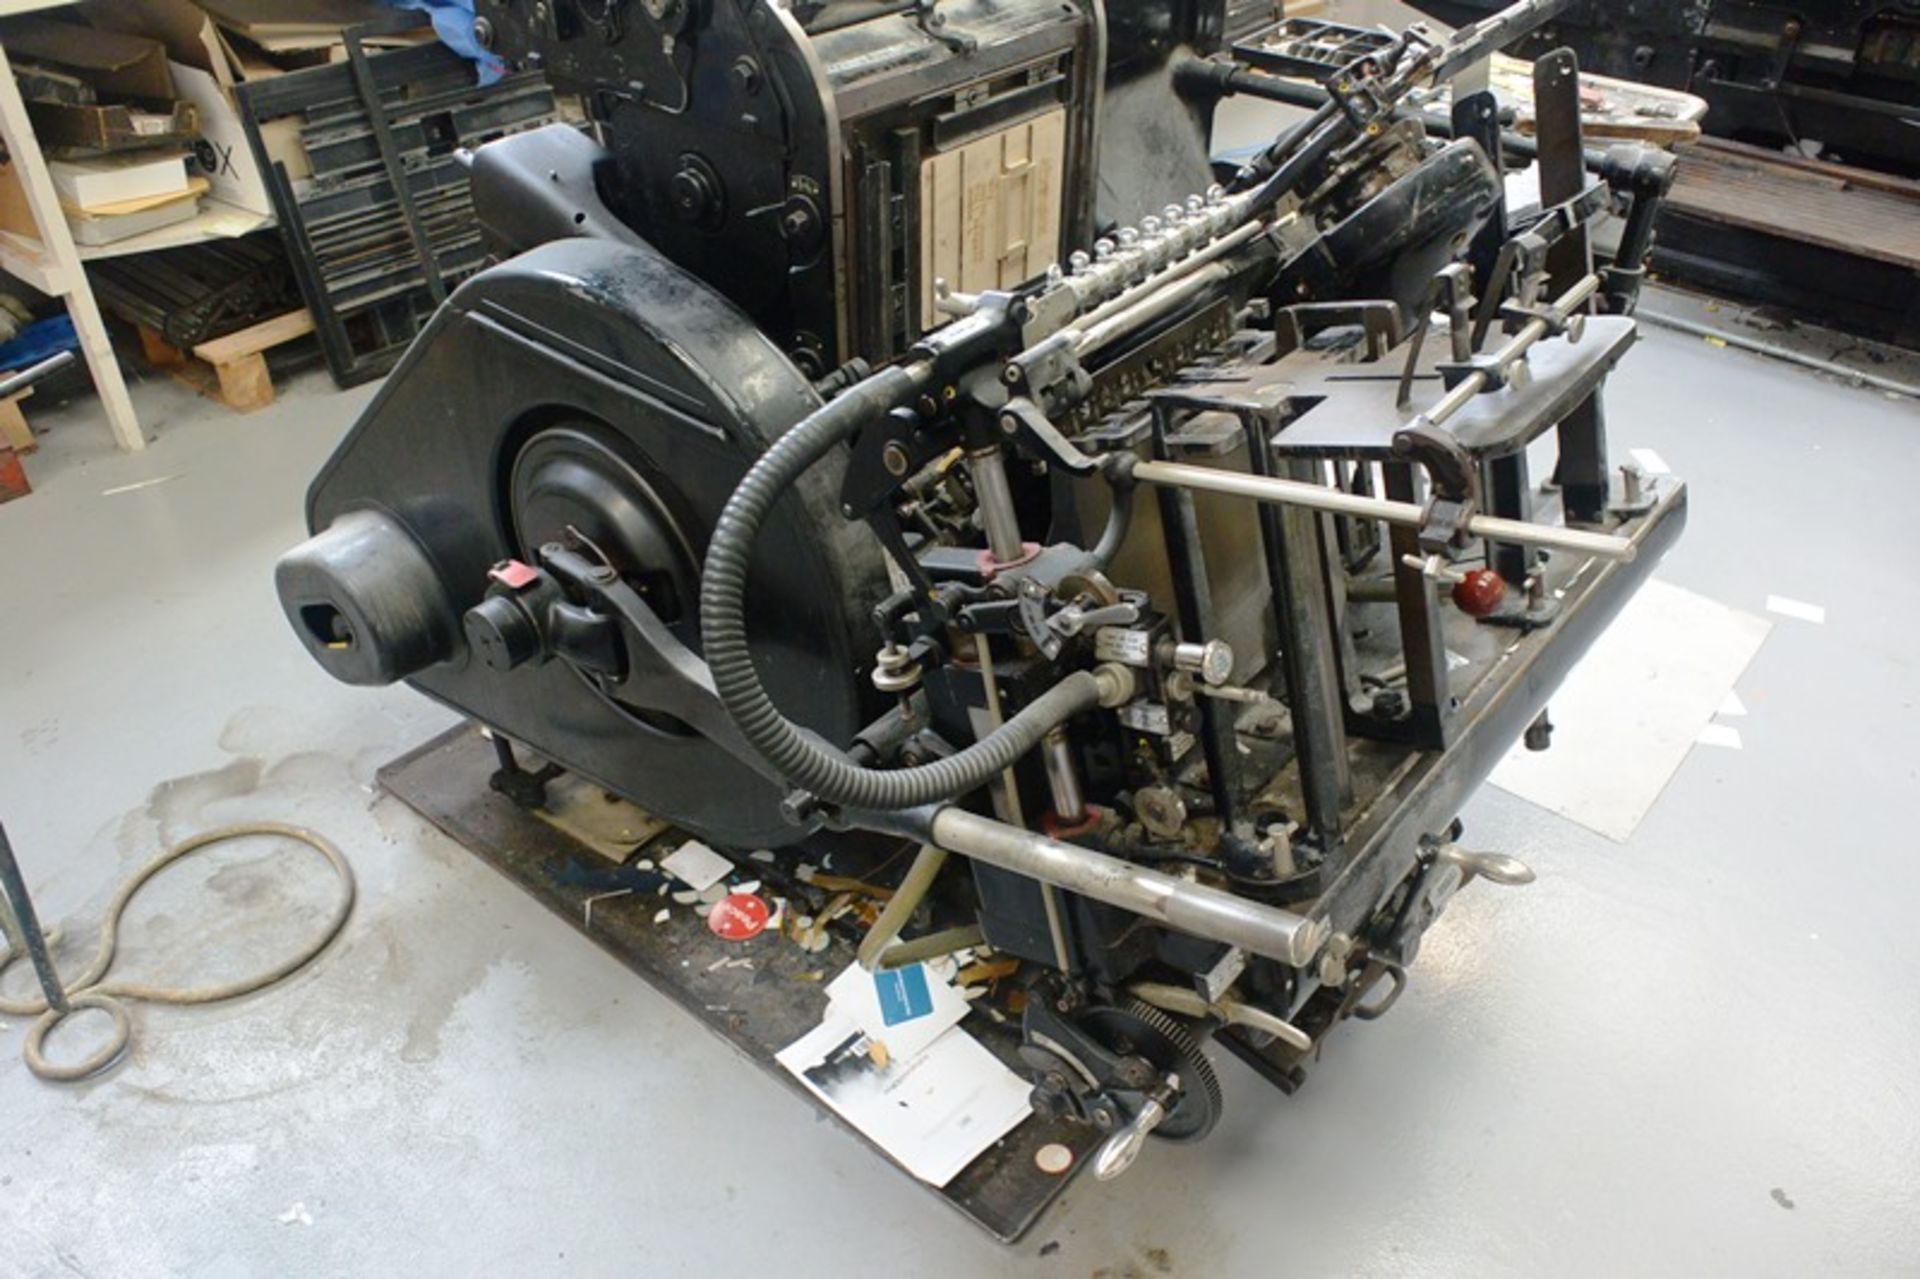 Original Heidelberg platen type cutting and creasing press, serial no. 138280E, 34 x 26cm platen - Image 4 of 5